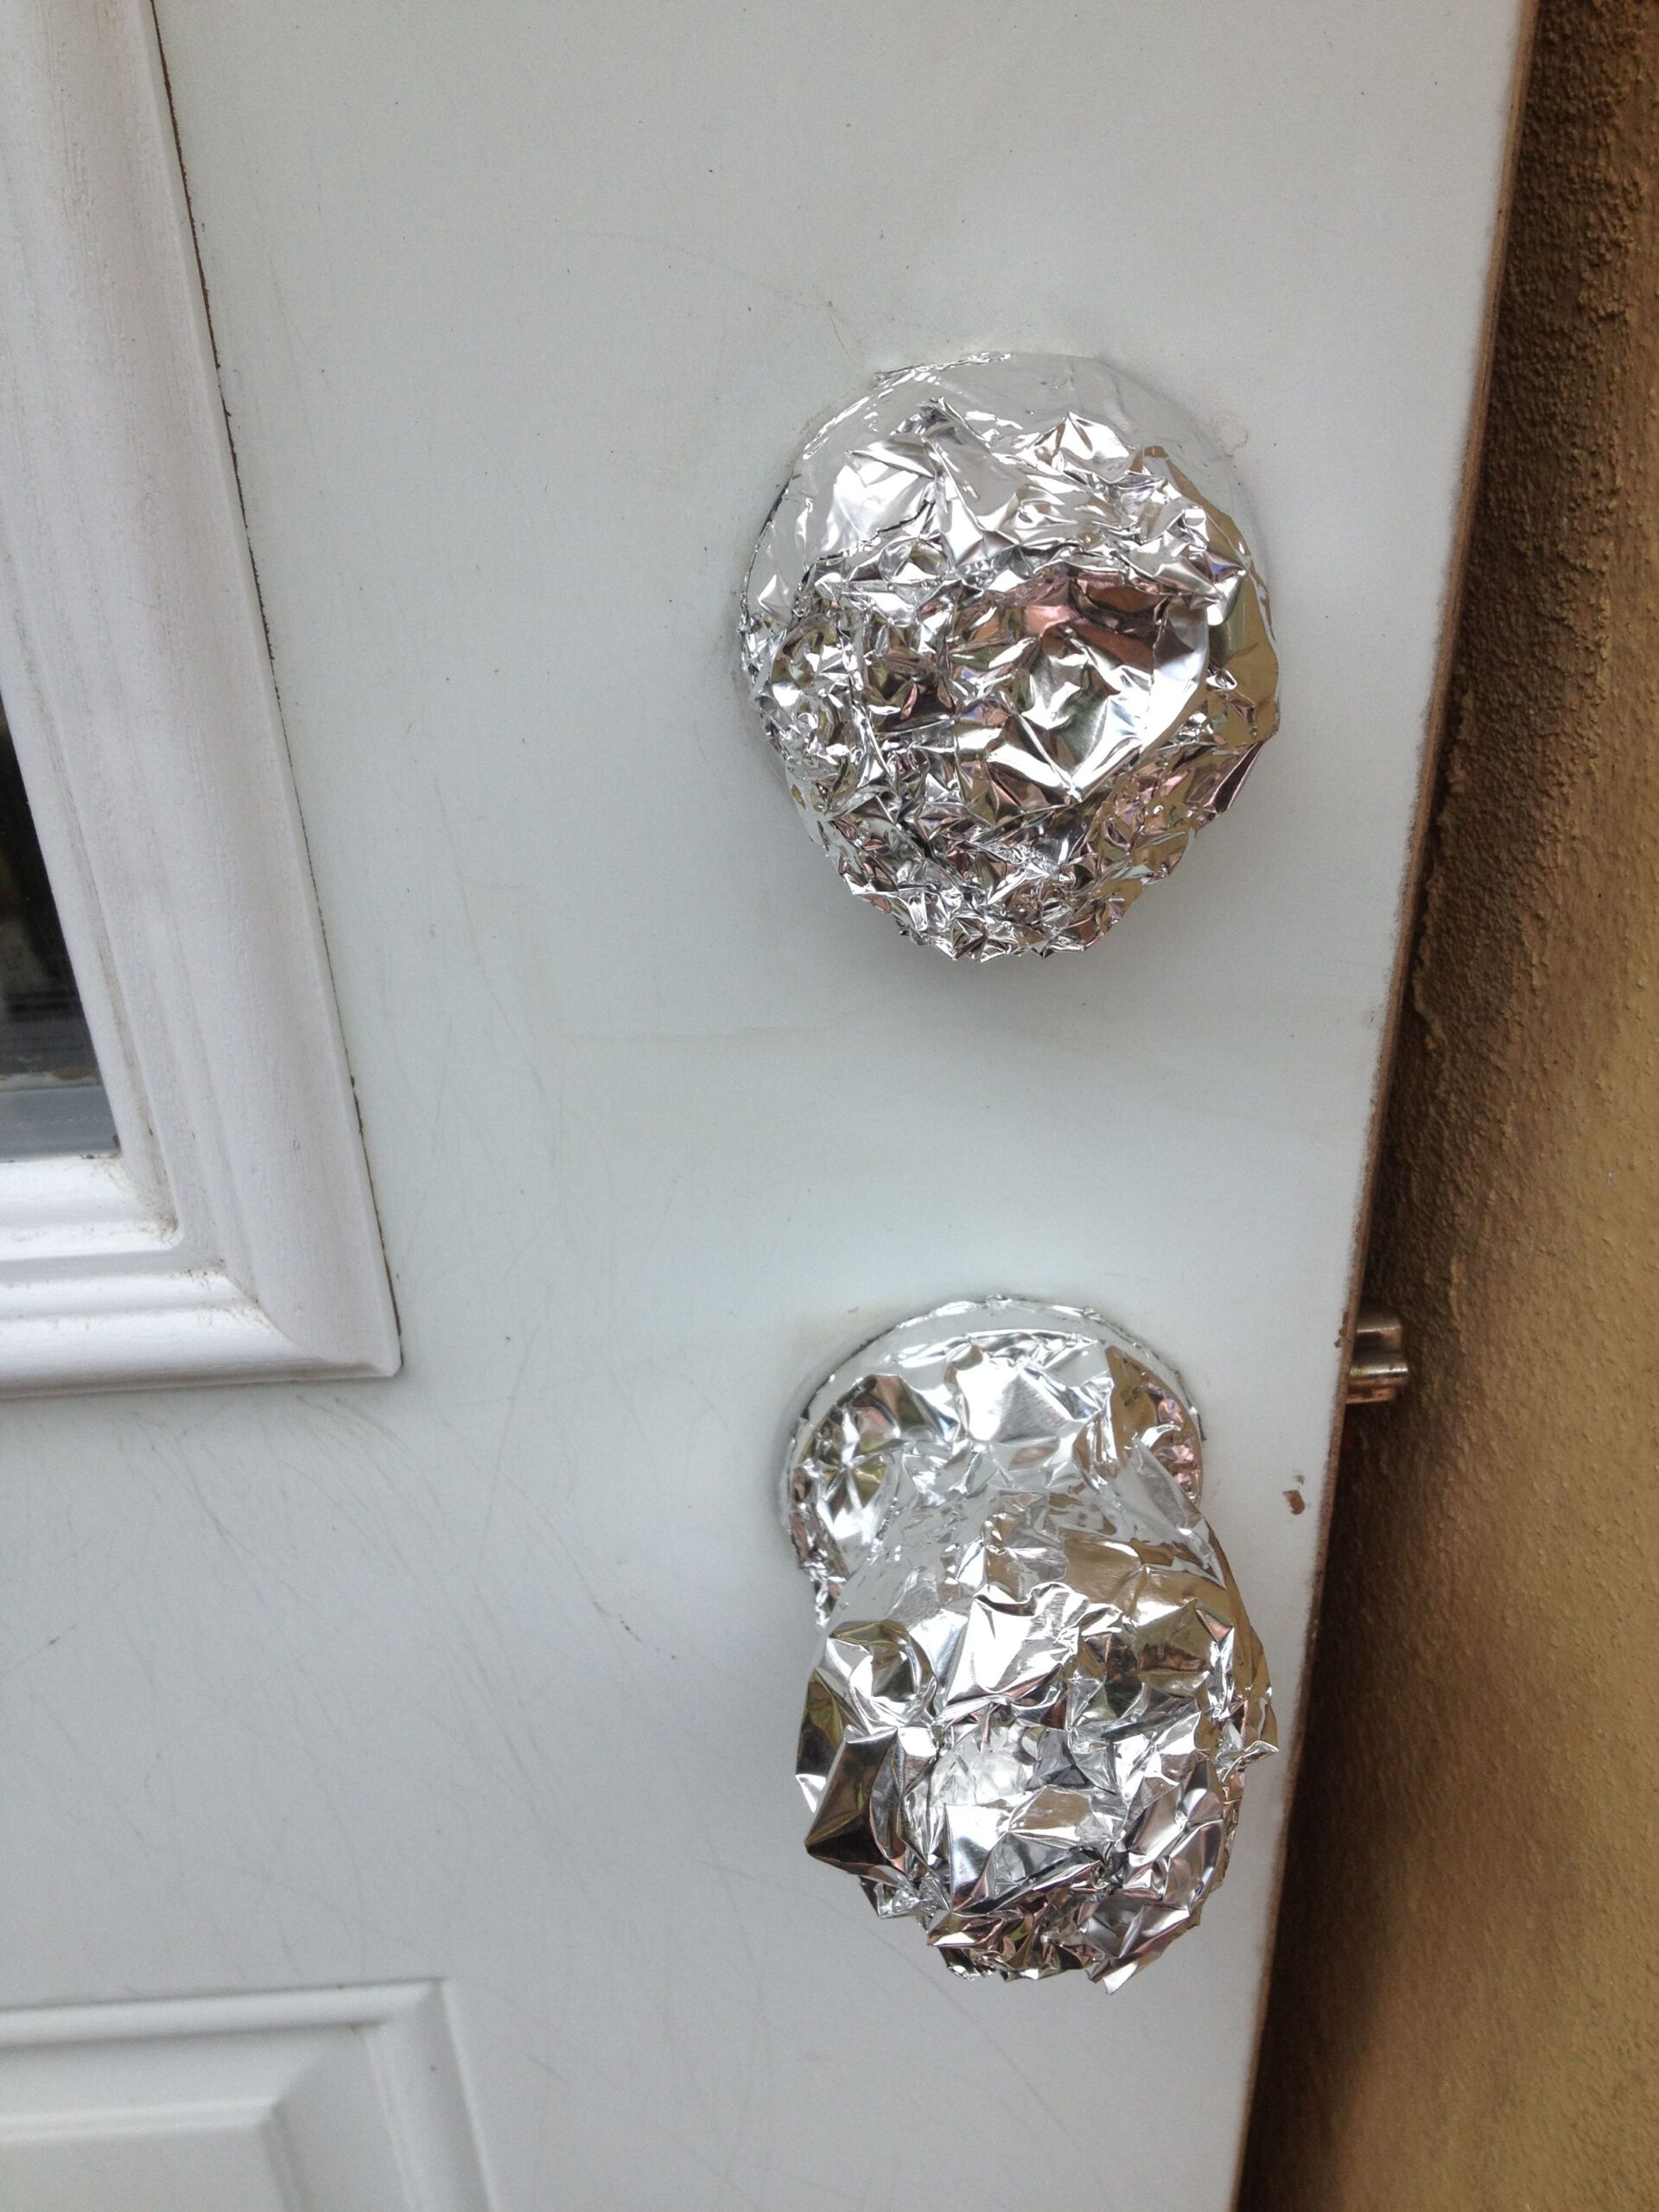 Why Wrap Foil Around Door Knob?